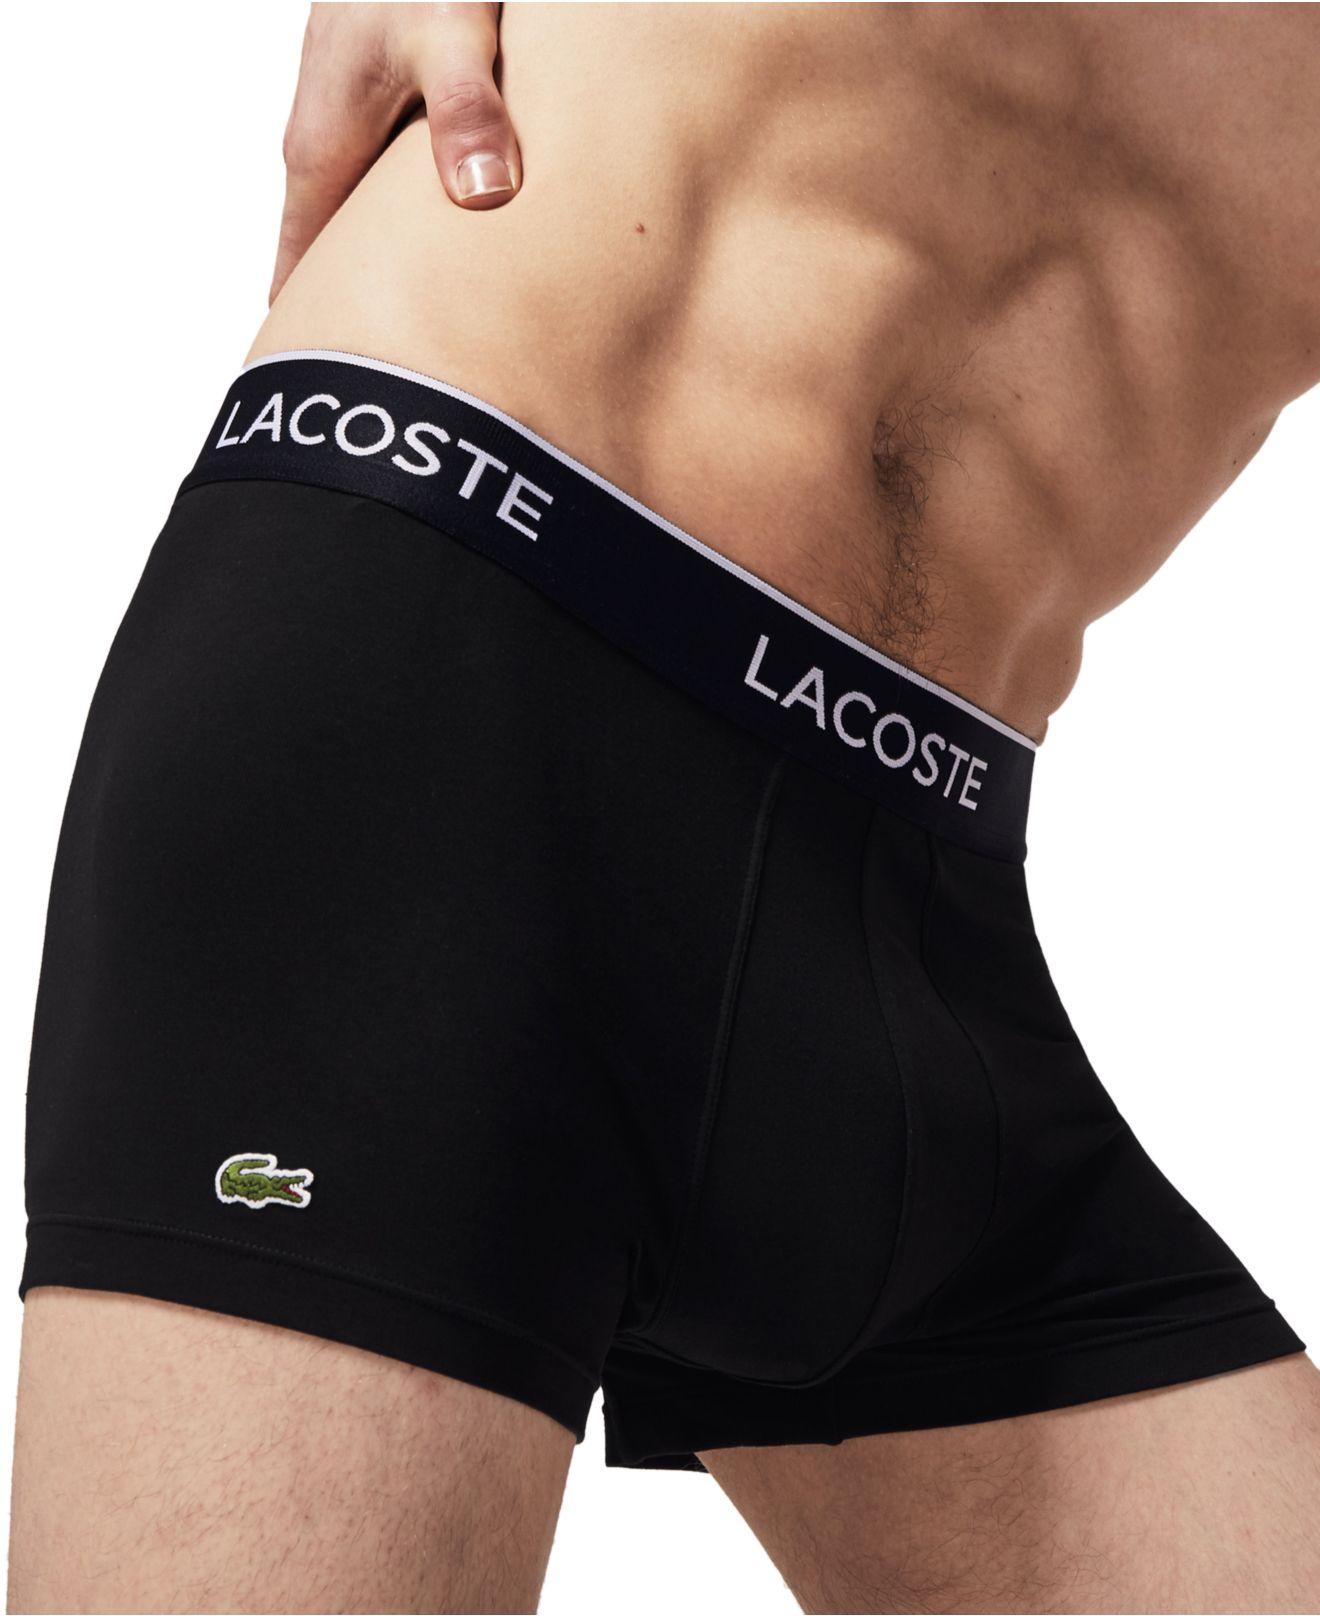 Lacoste Cotton 3-pk. Stretch Trunks in Black for Men - Lyst